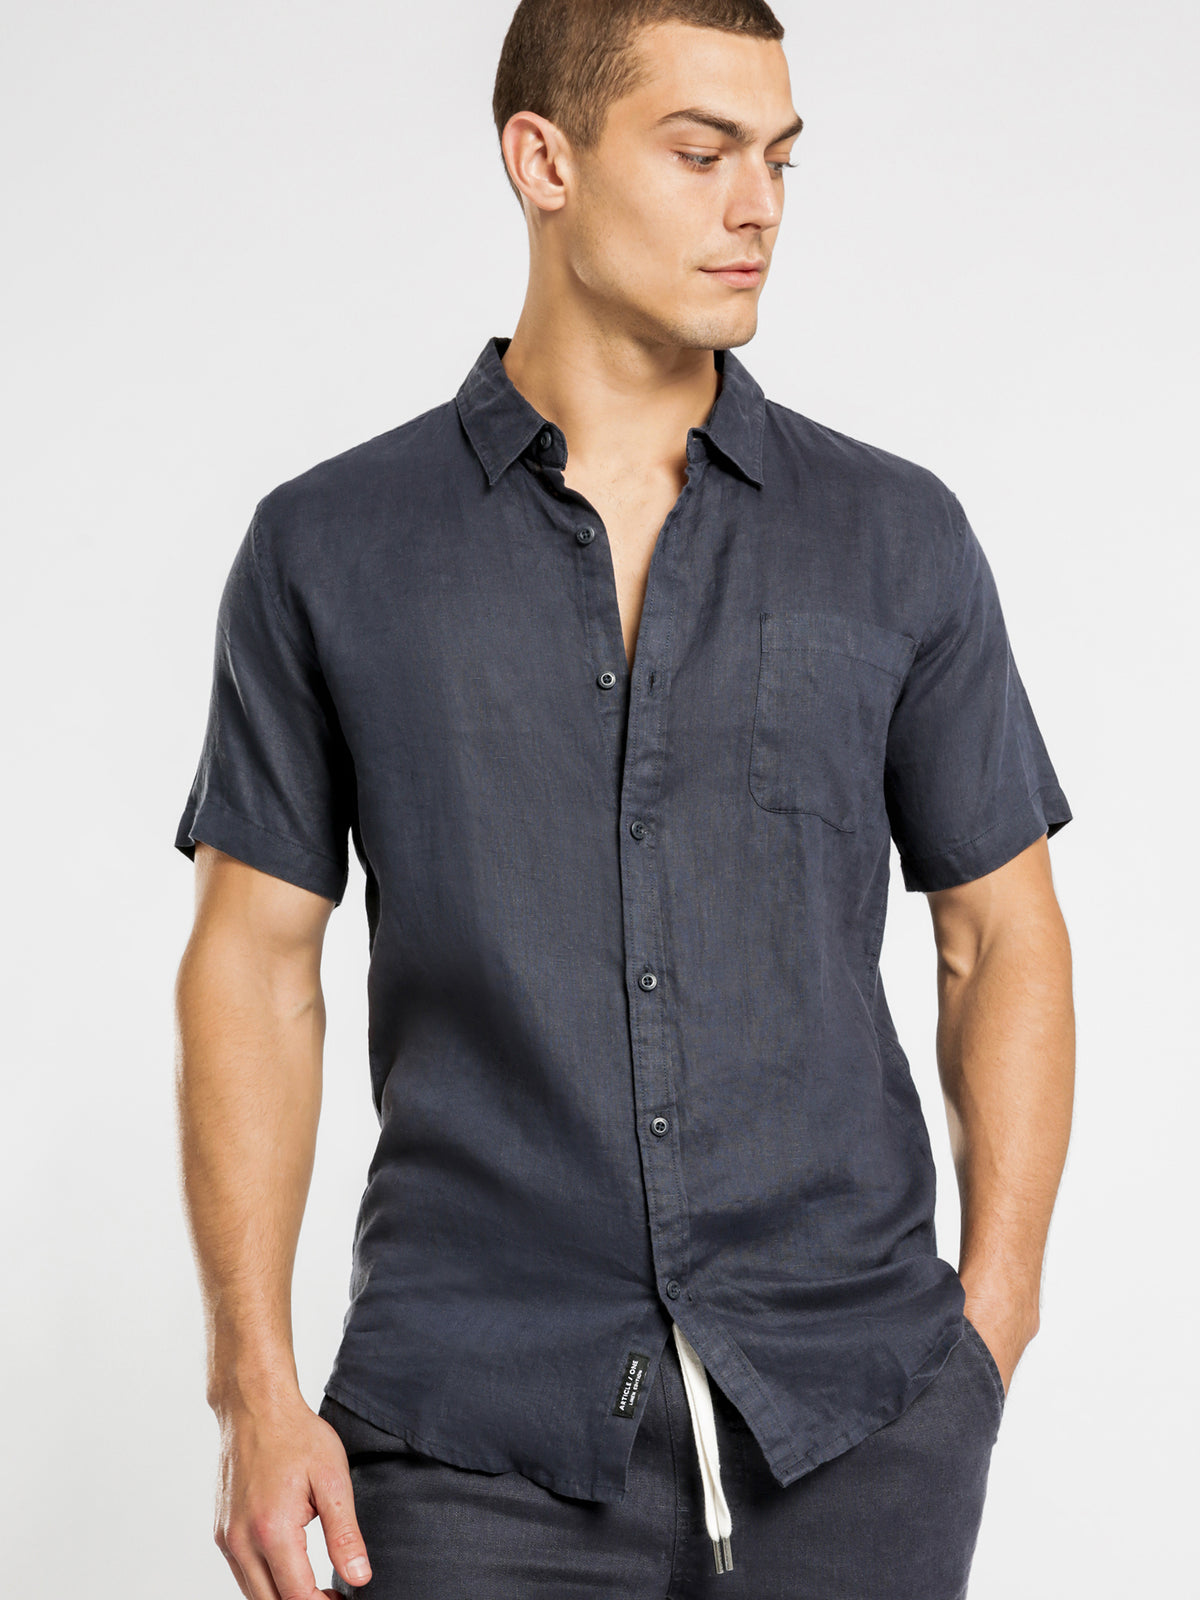 Nelson Linen Short Sleeve Shirt in Navy Blue